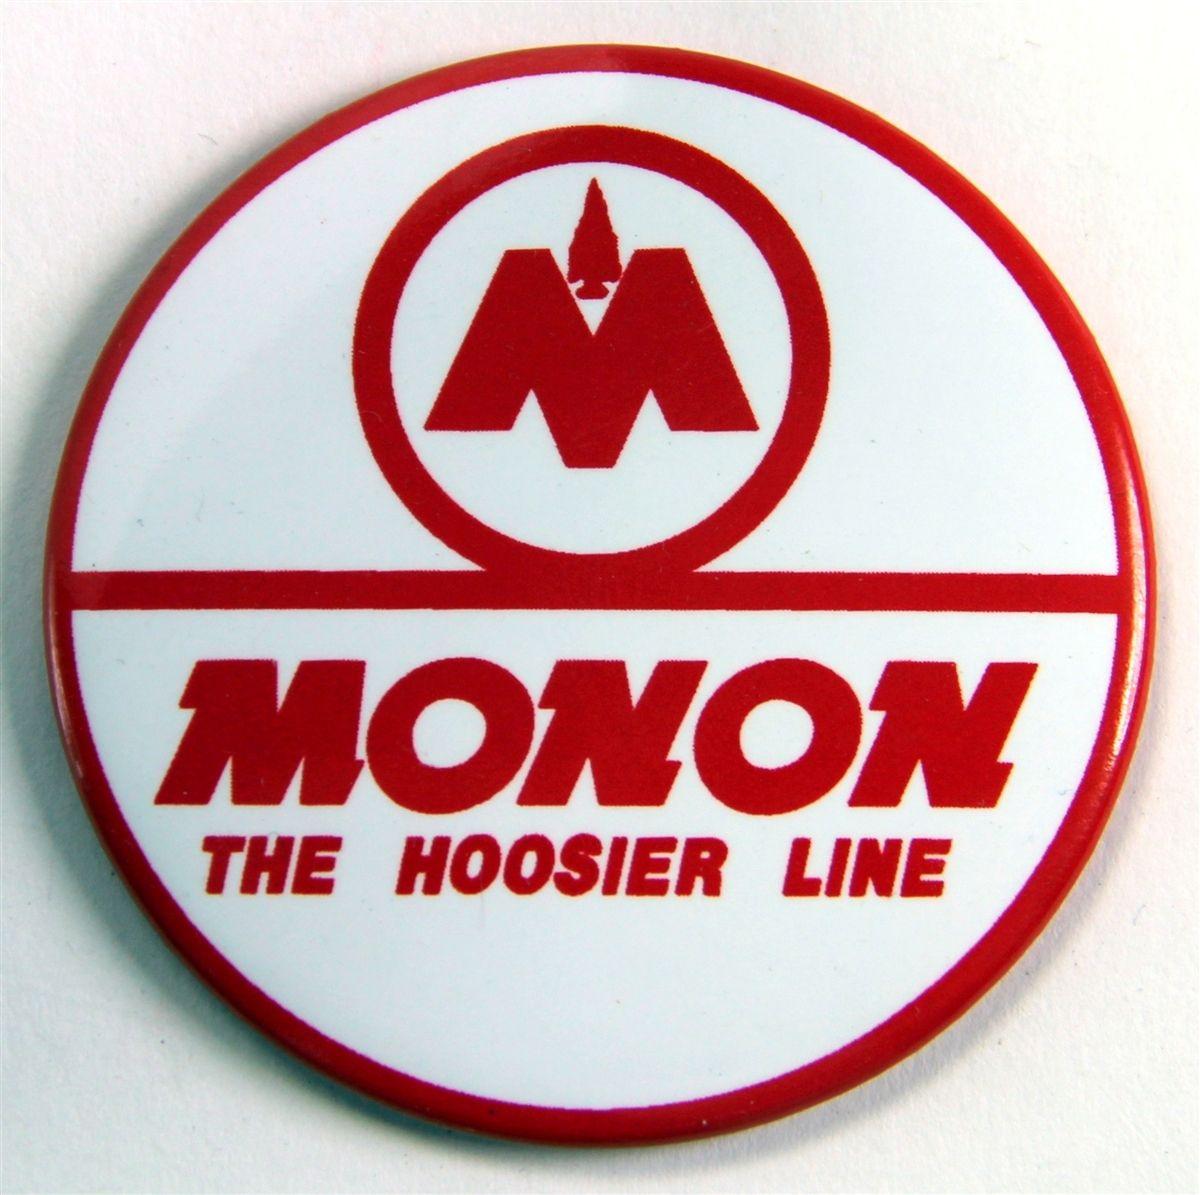 Refrigerator Logo - Country Trains RMMONO Monon, The Hoosier Line Logo Refrigerator